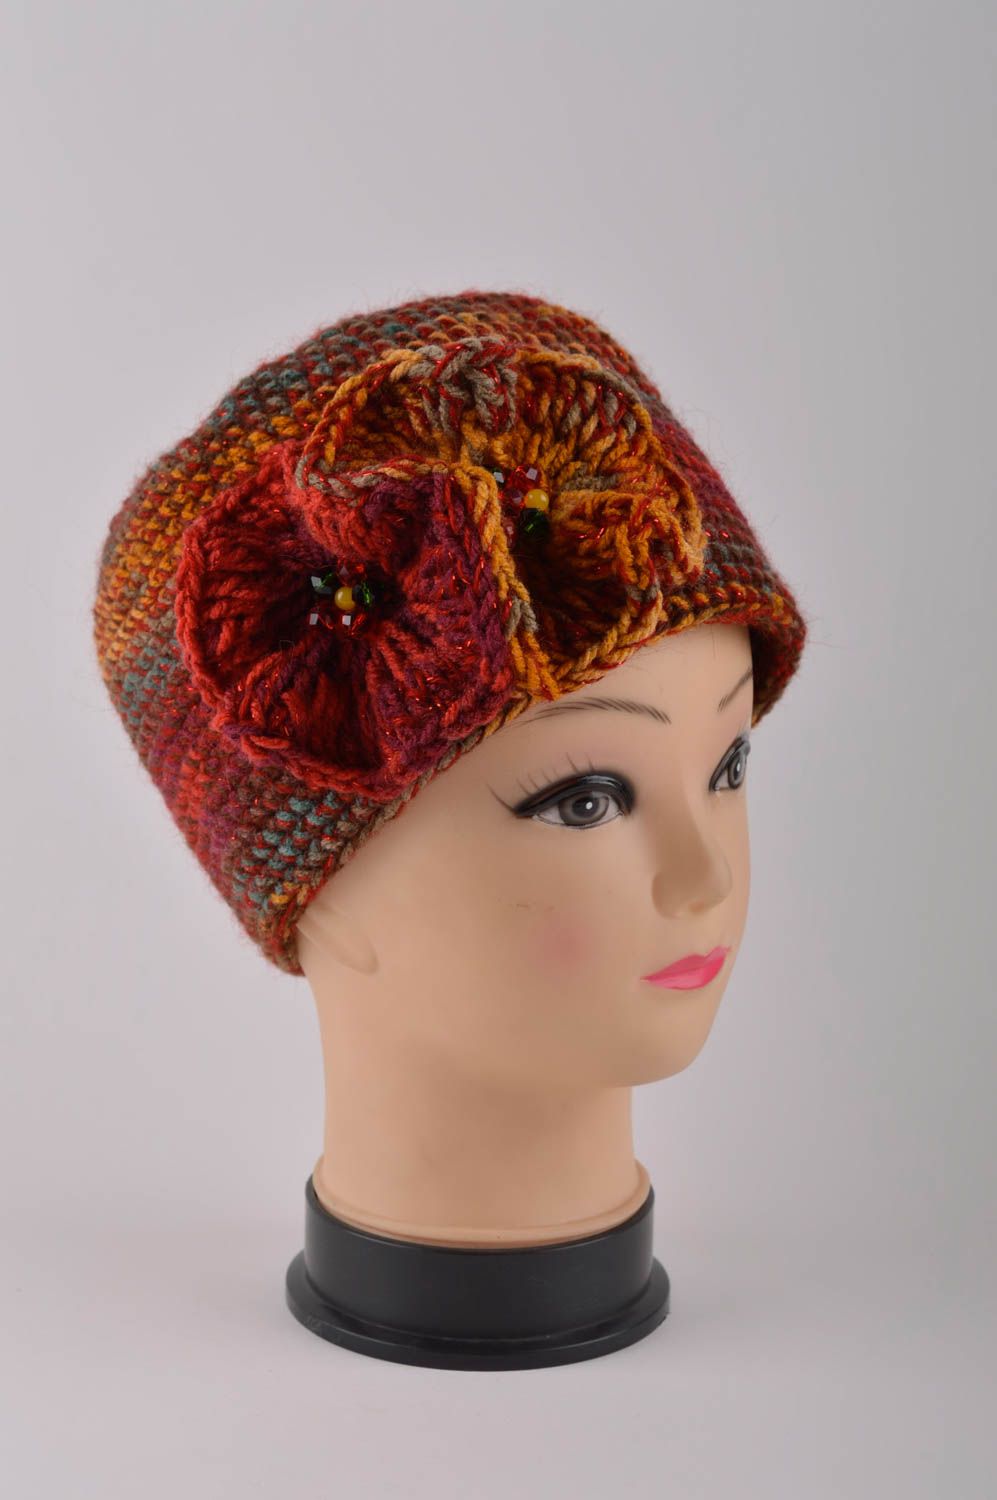 Handmade winter hat crochet hat for women ladies hat designer accessories  photo 2